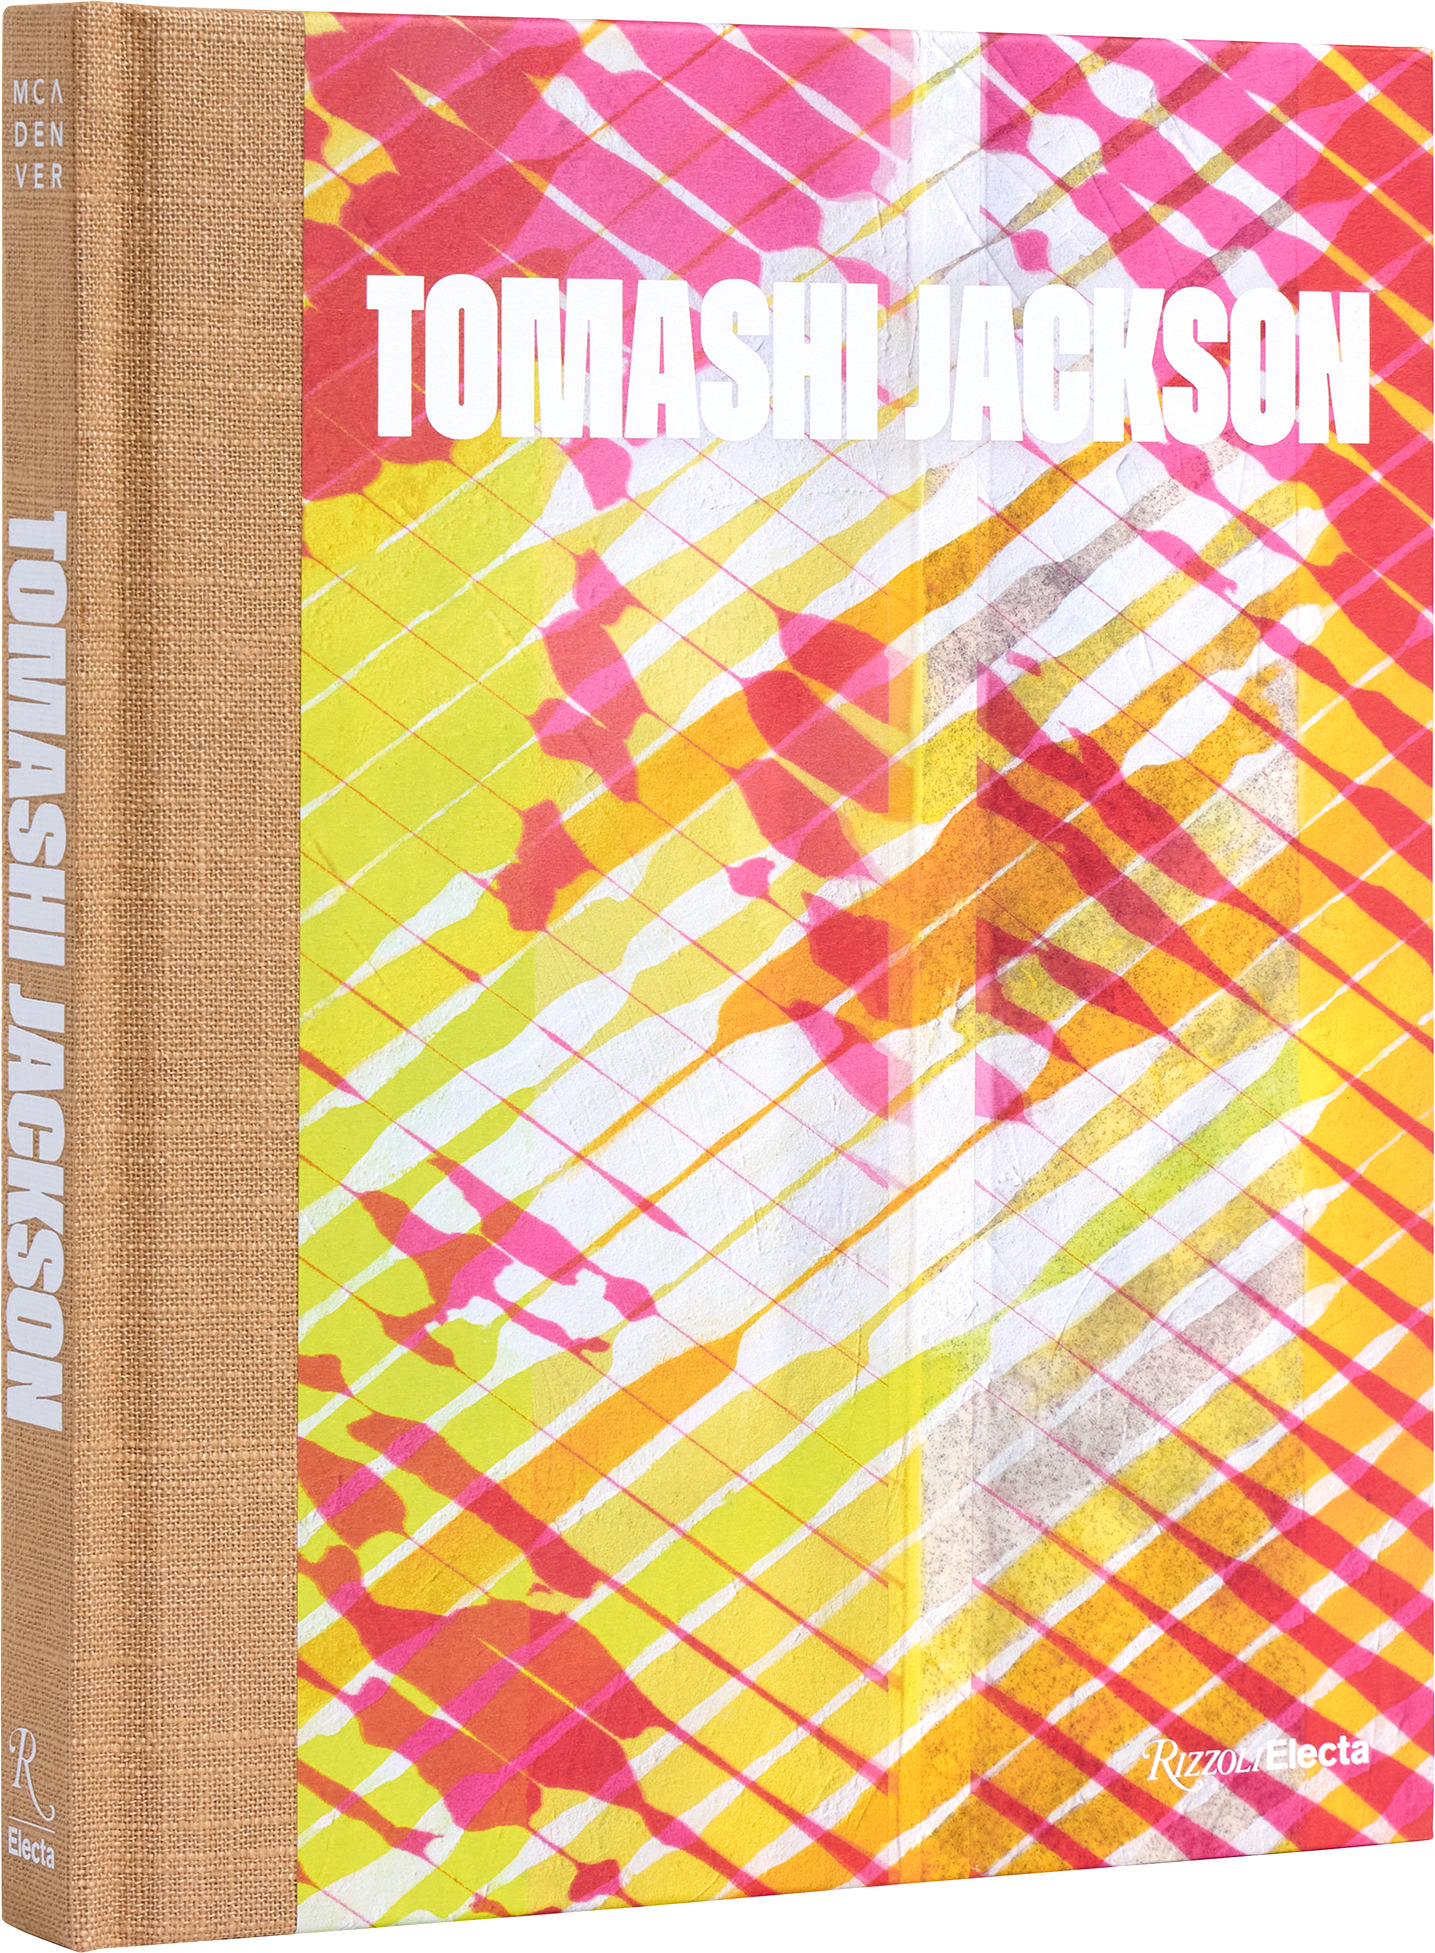 Tomashi Jackson